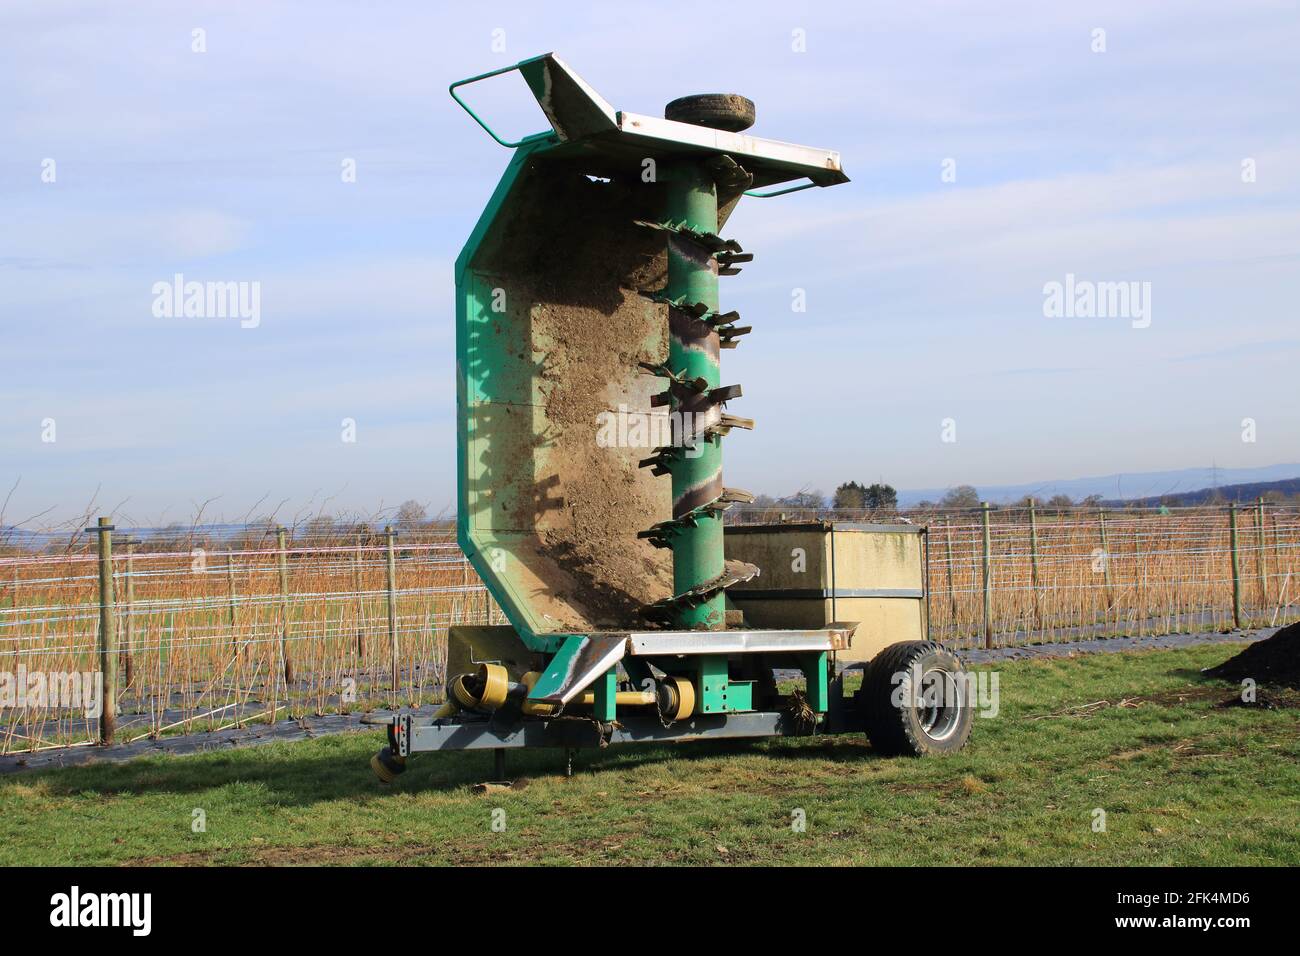 Machine for shredding compost on a trailer Stock Photo